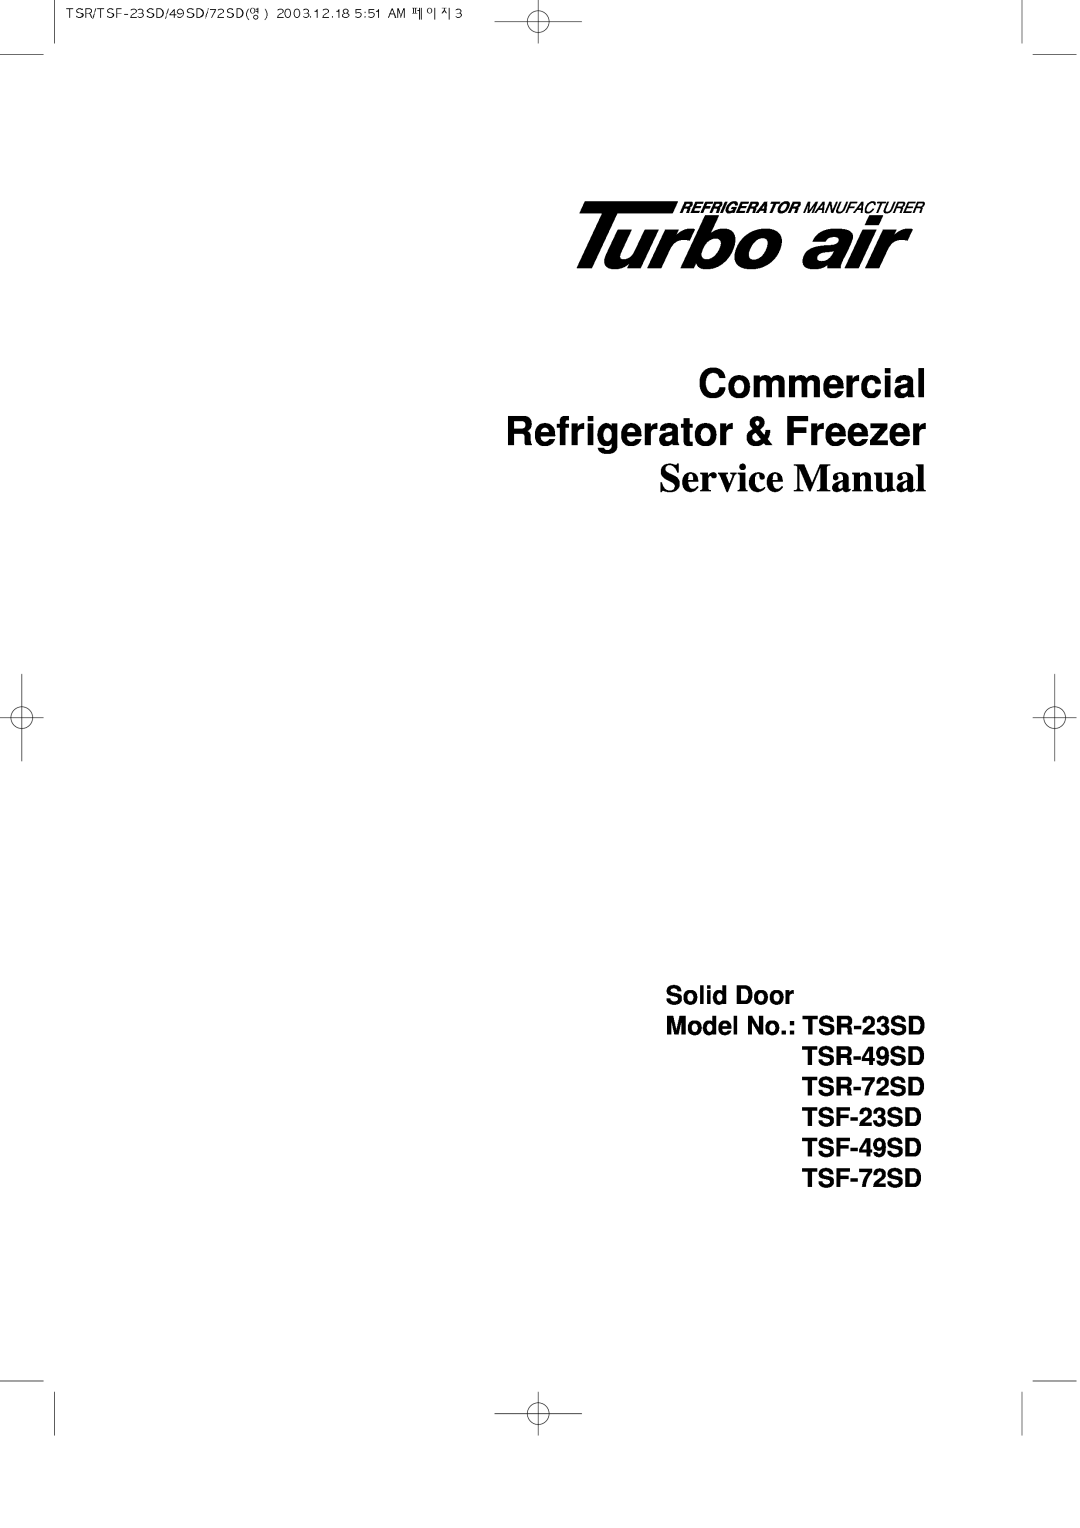 Turbo Air TSF-49SD, TSF-23SD, TSR-72SD, TSR-49SD service manual Commercial Refrigerator & Freezer, Service Manual, TSF-72SD 